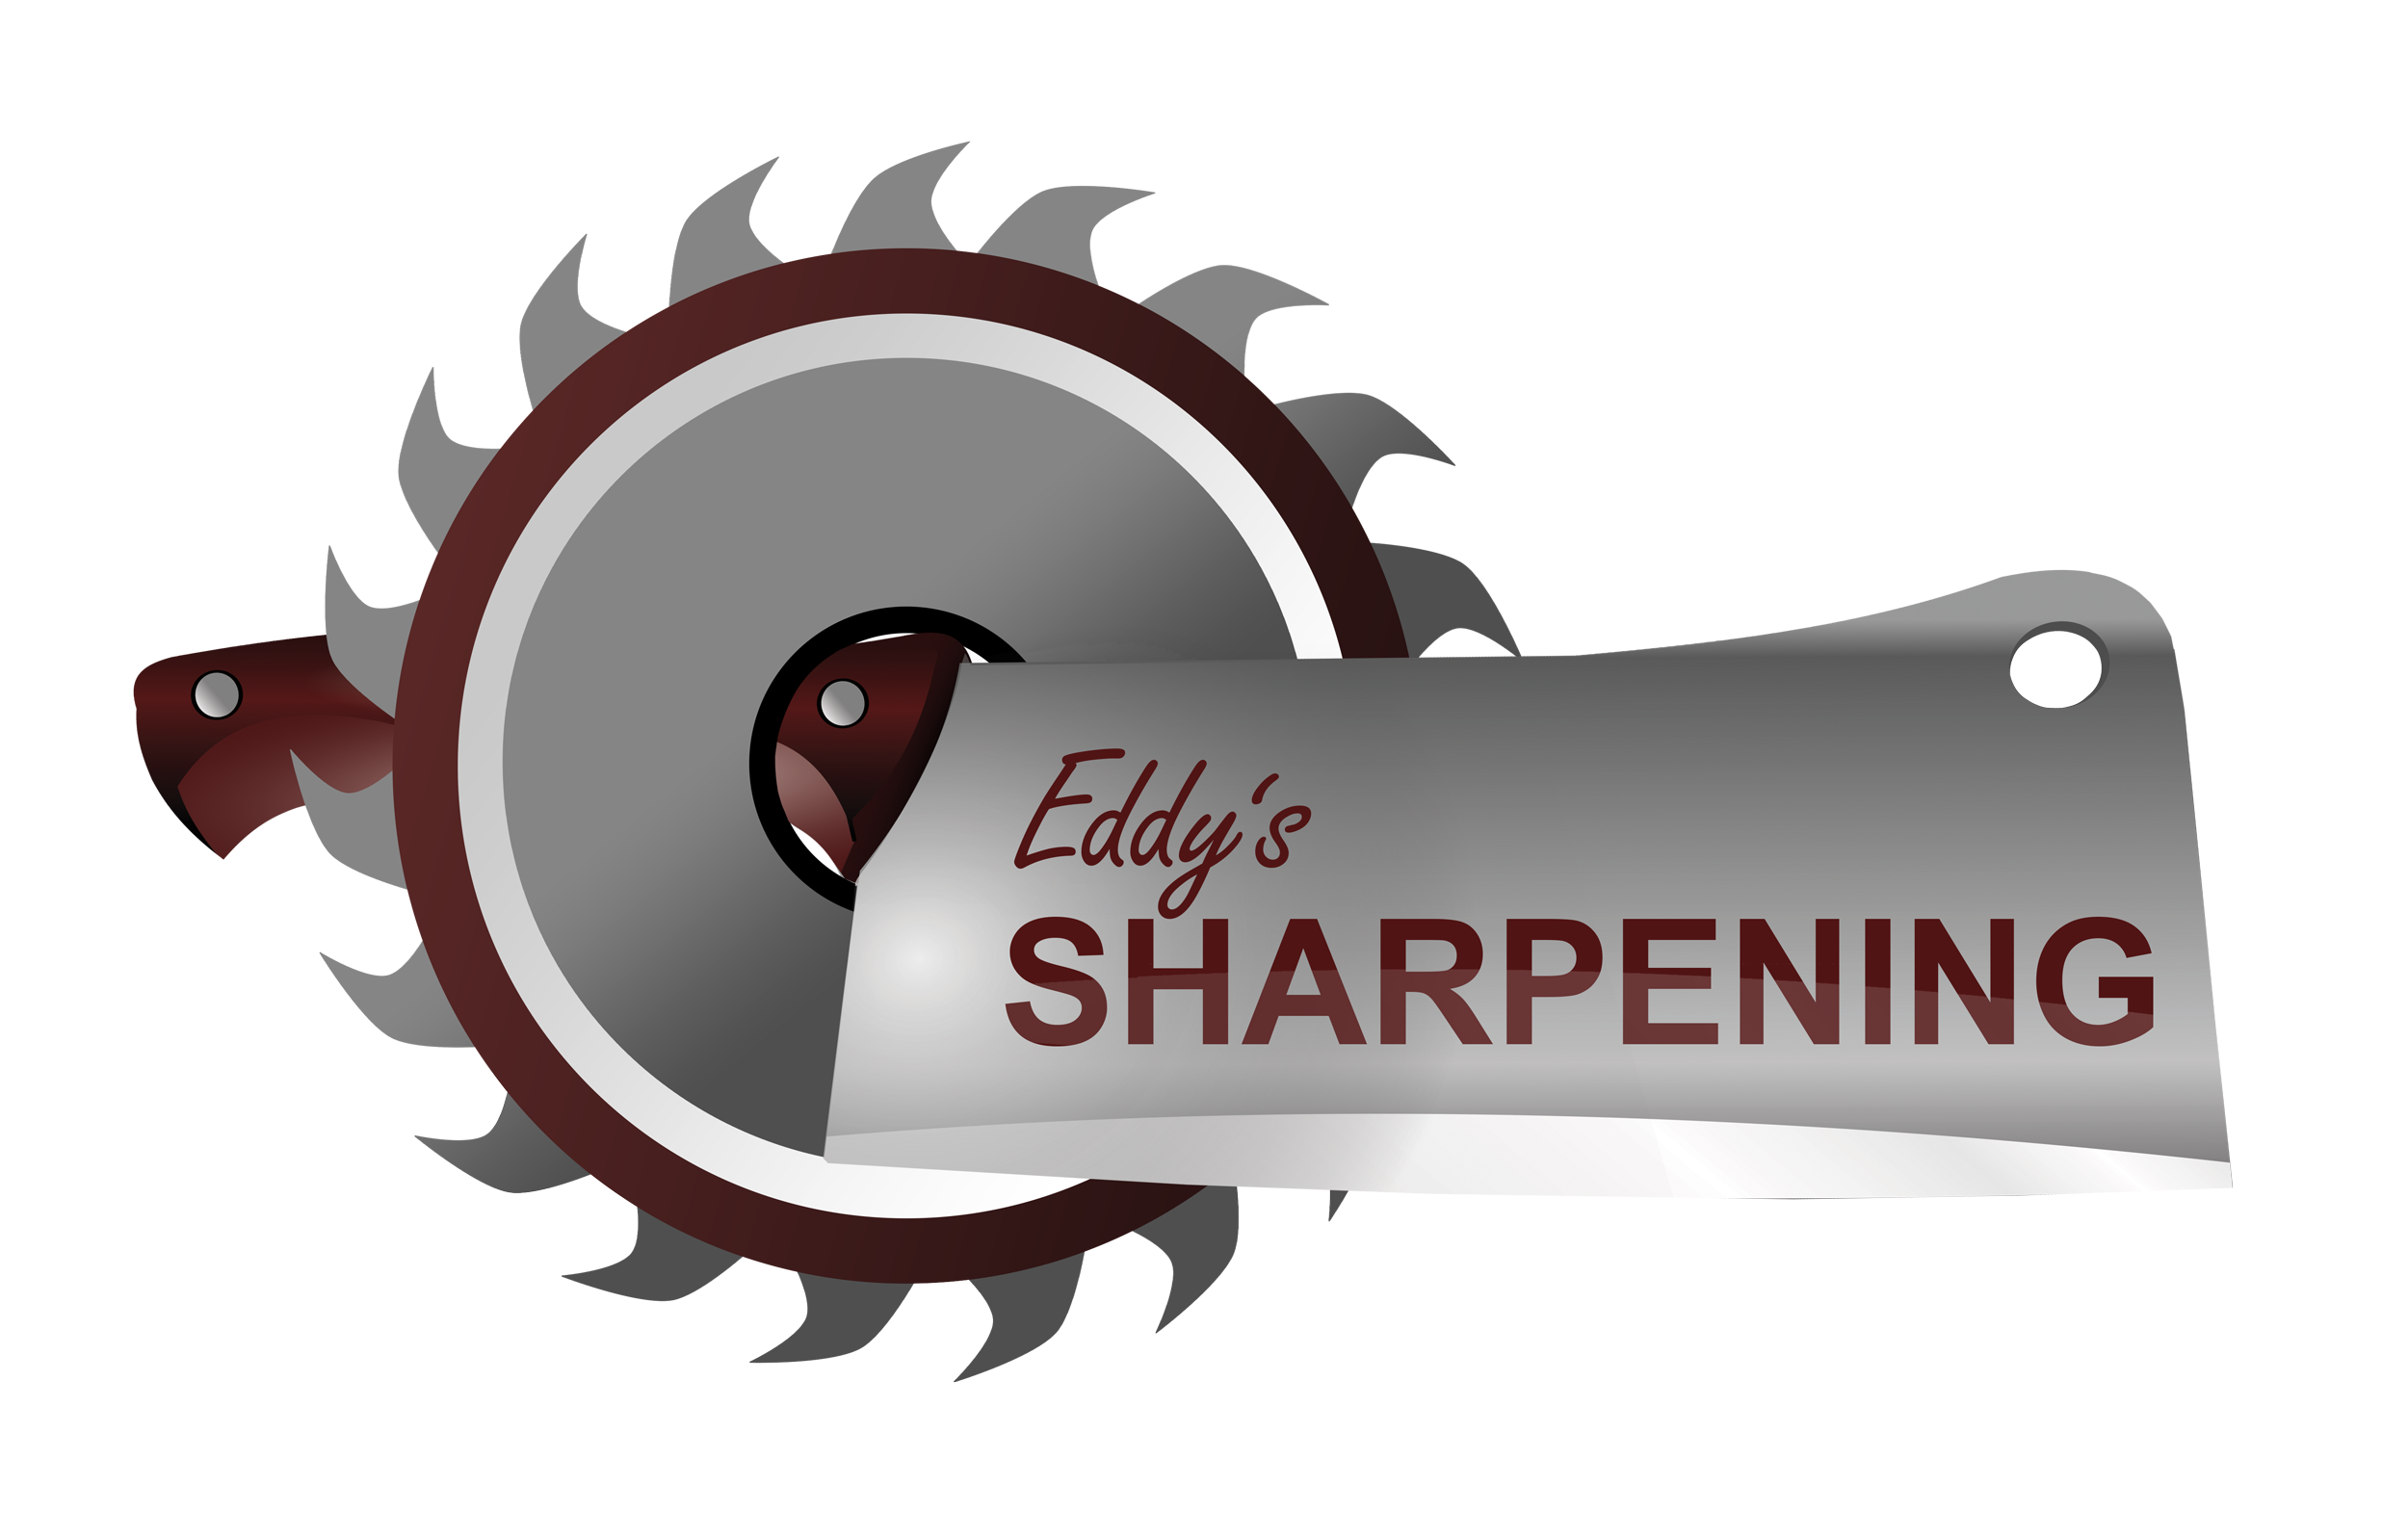 Eddys Sharpening